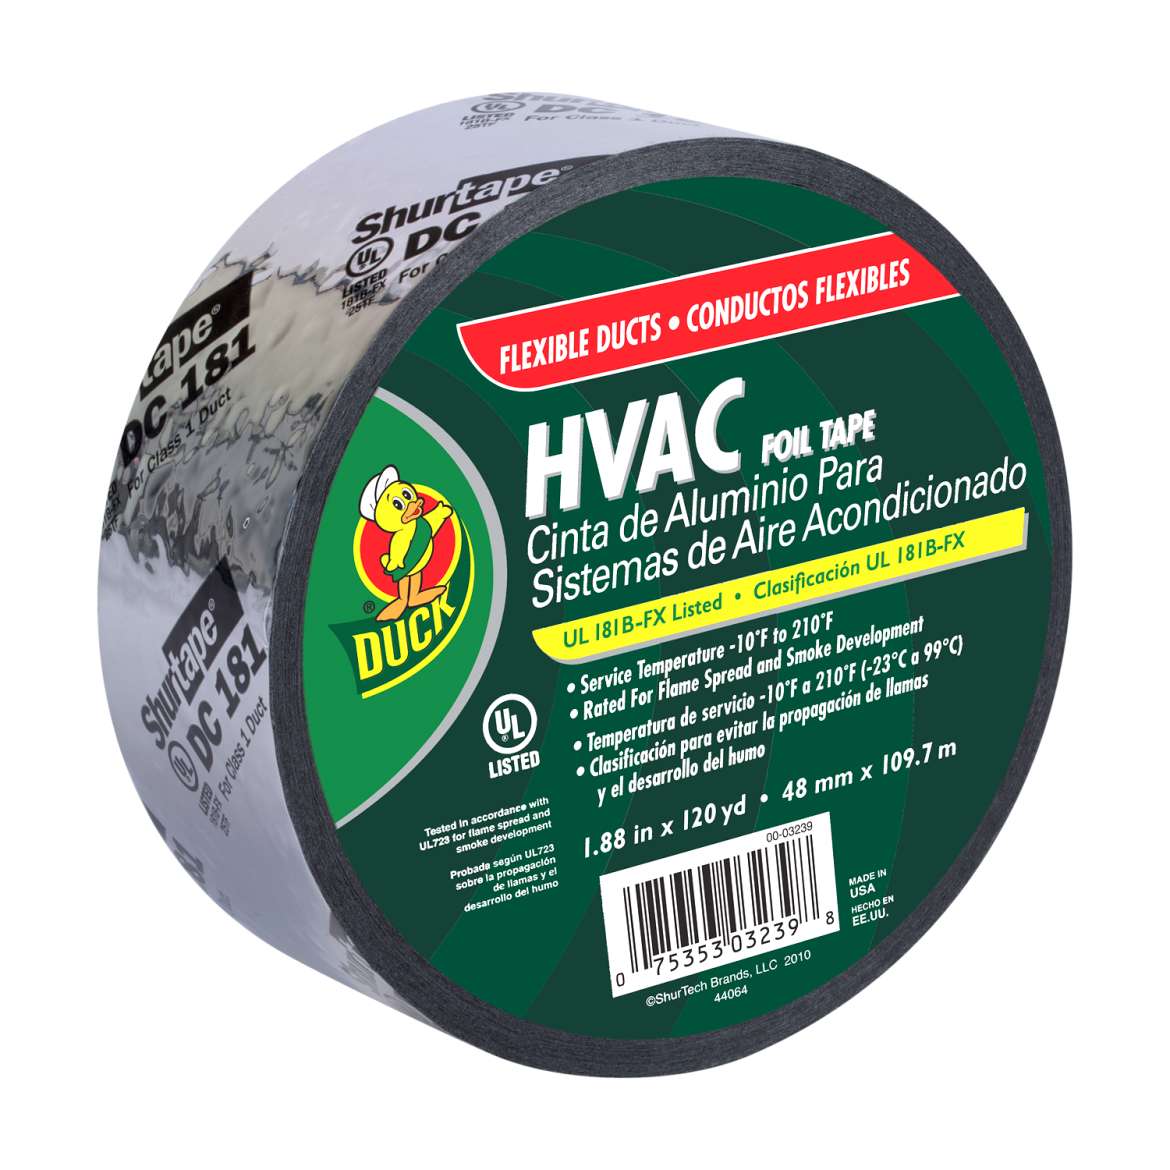 Duck Brand HVAC Duct Sealing Tape